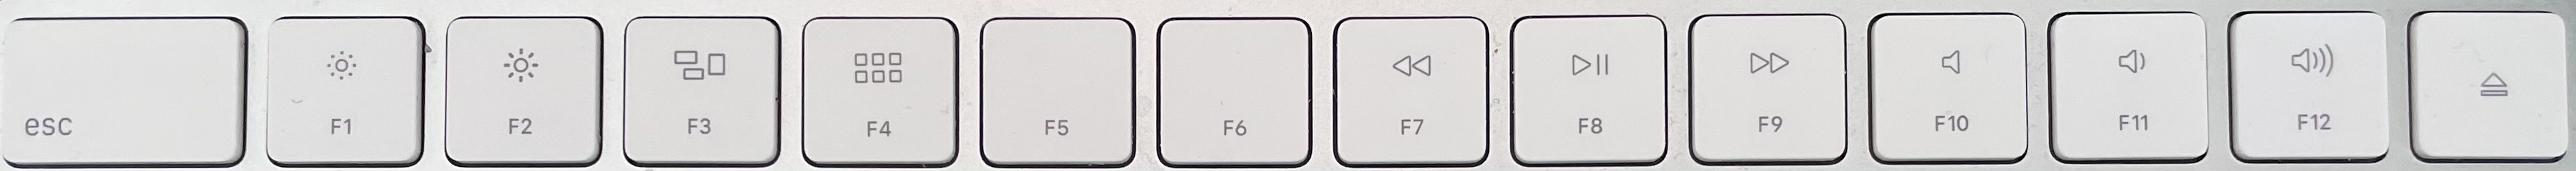 New Mac Magic Keyboard: What we'd like to see - old function keys